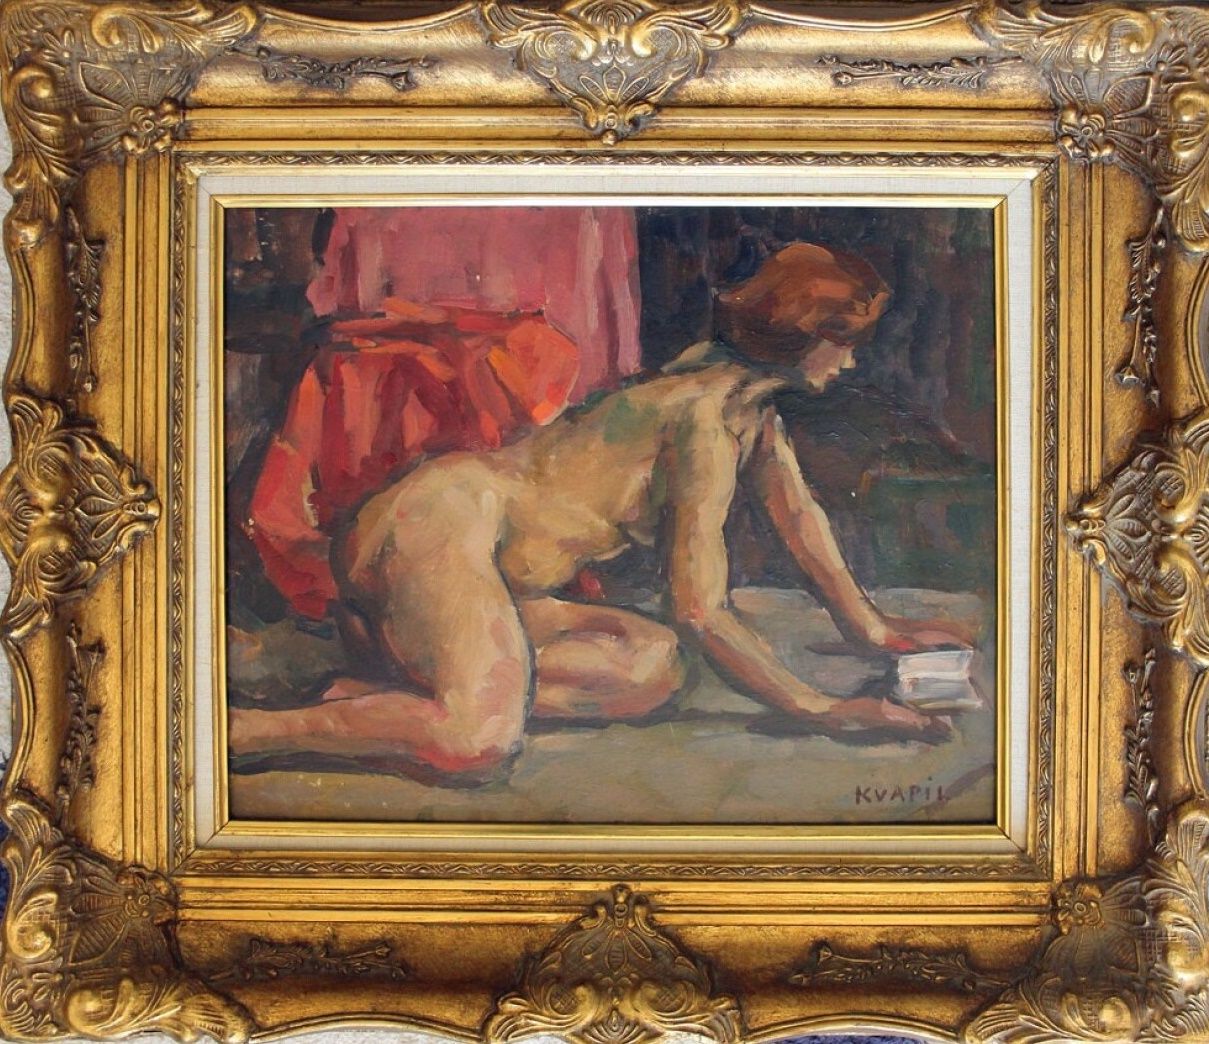 Null 查尔斯-克瓦皮尔 (1884-1958)

读书会

木板上的油彩

右下方有签名

38 x 46 厘米